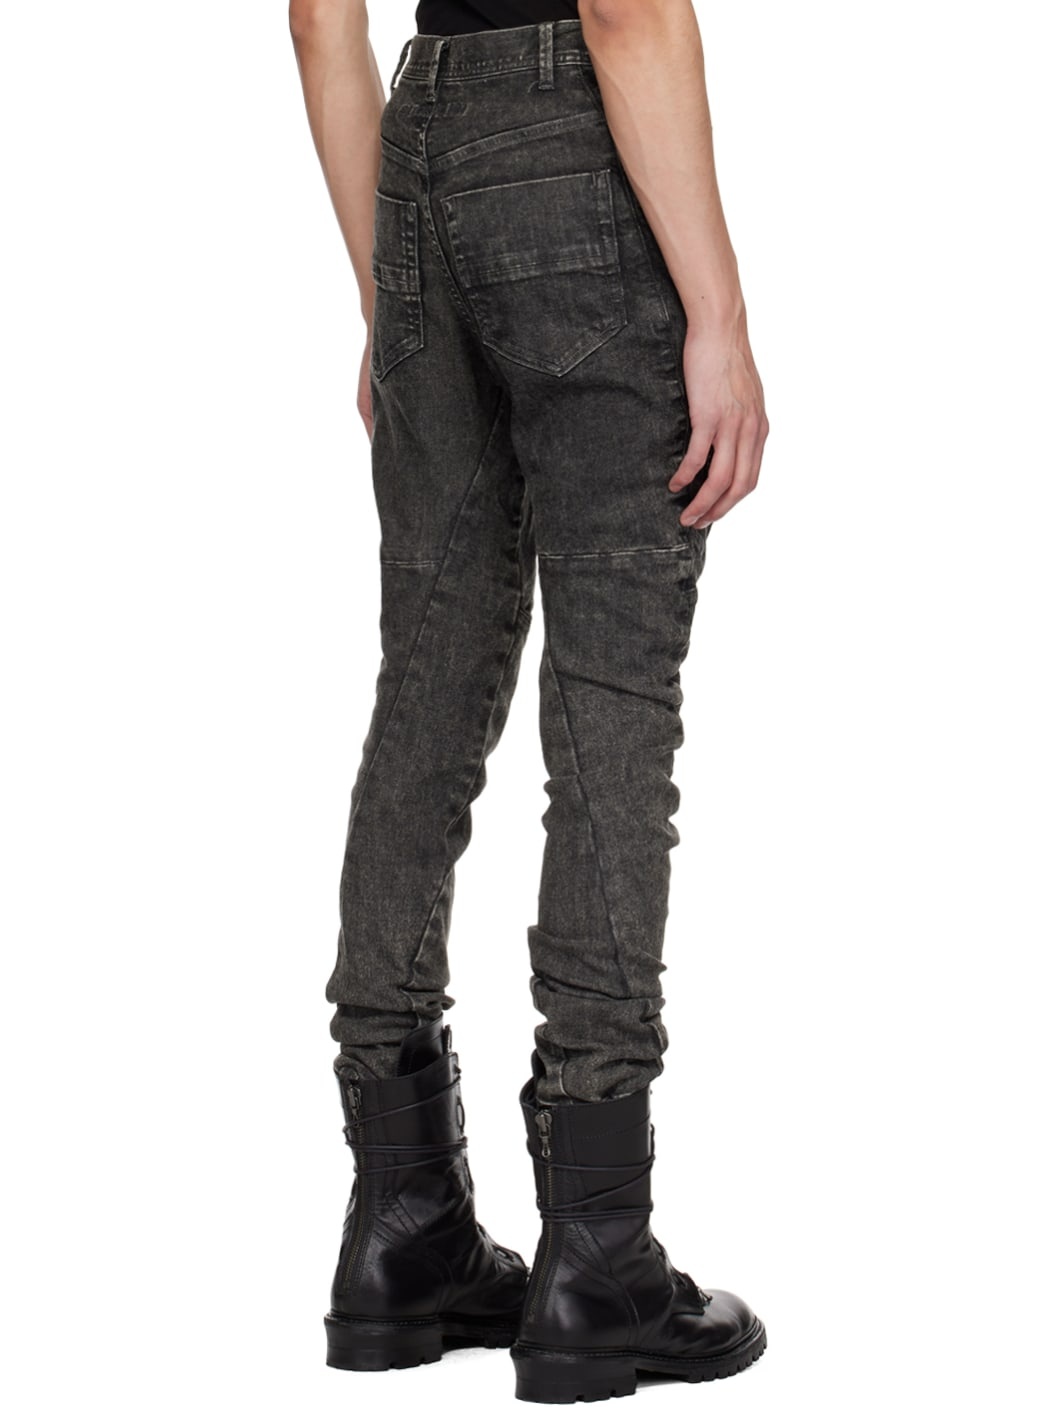 Gray Rider Jeans - 3